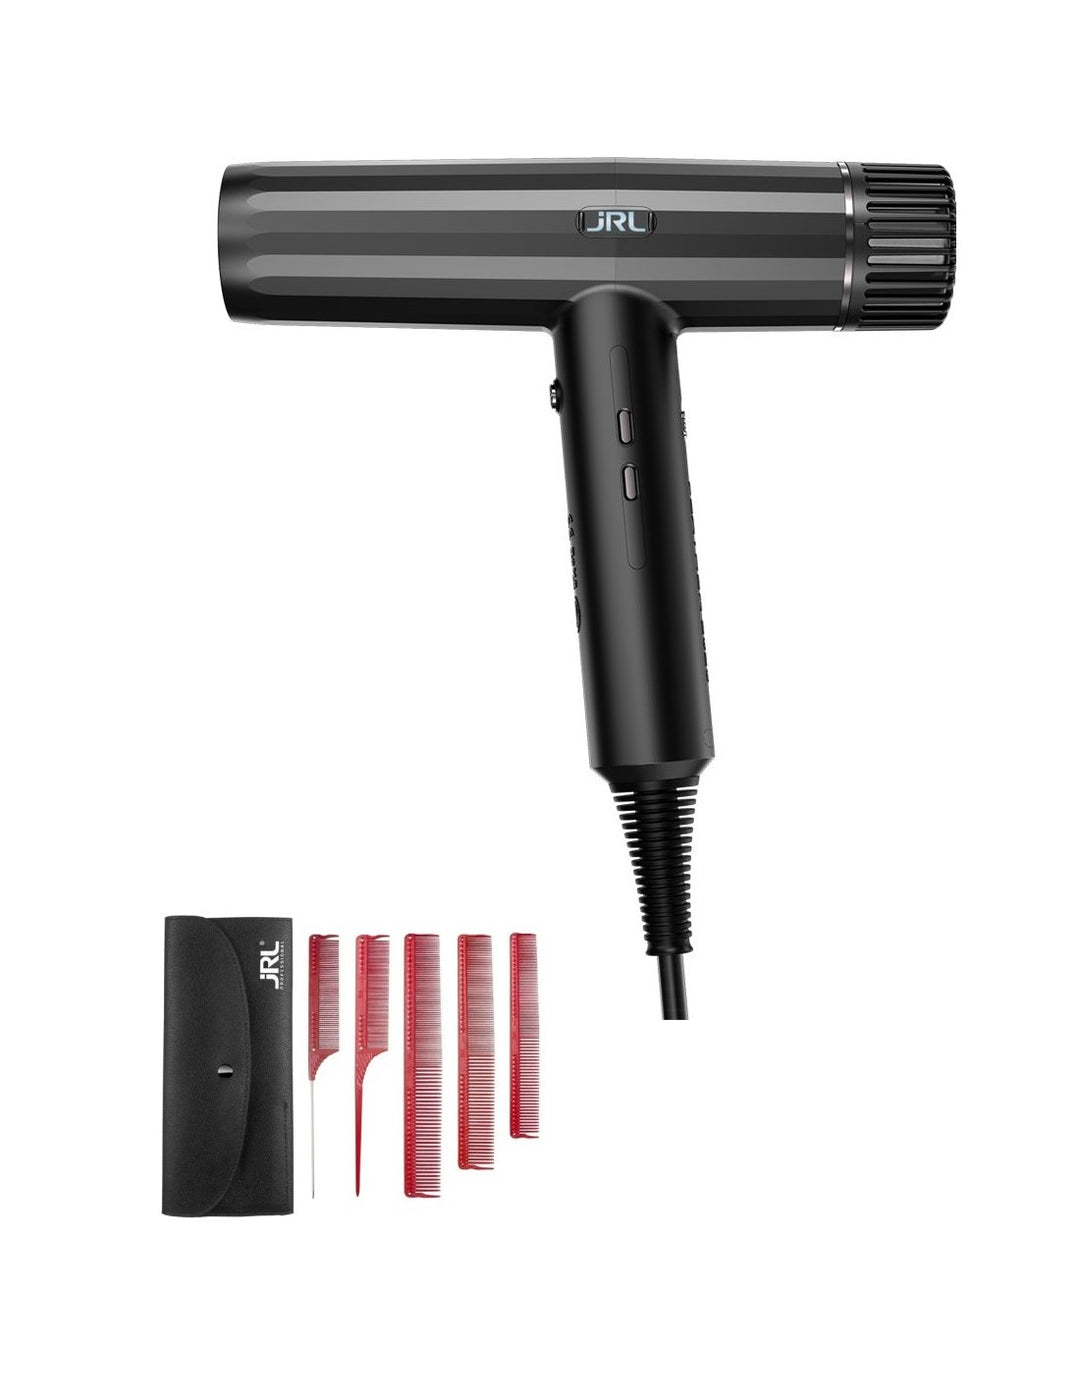 

Jrl Phon Forte Pro Digital Professional Hairdryer 2150W + J002 Comb Set, 5 pieces